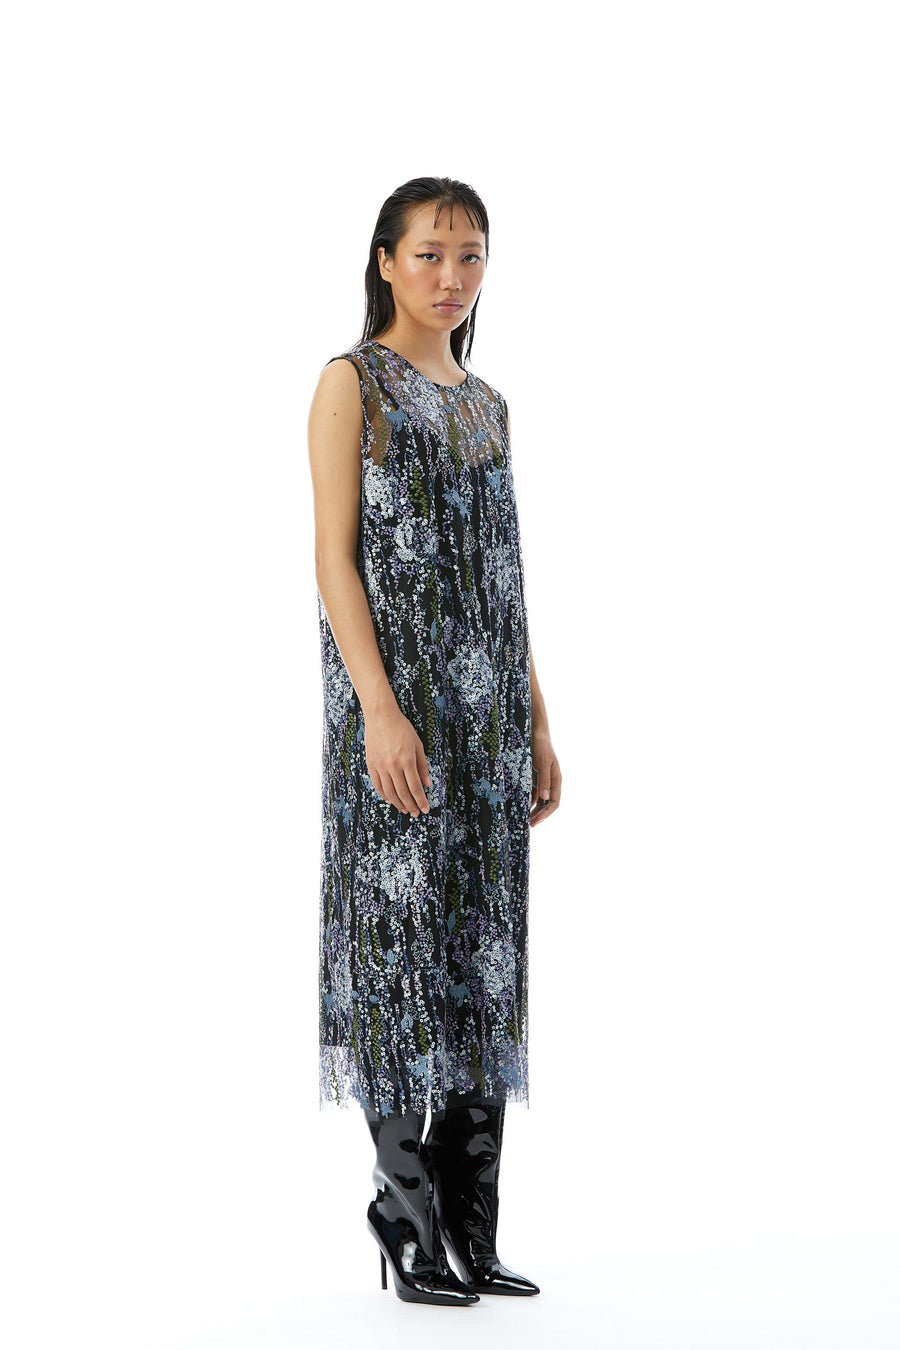 'Supernova' Embellished Dress - Kanika Goyal Label